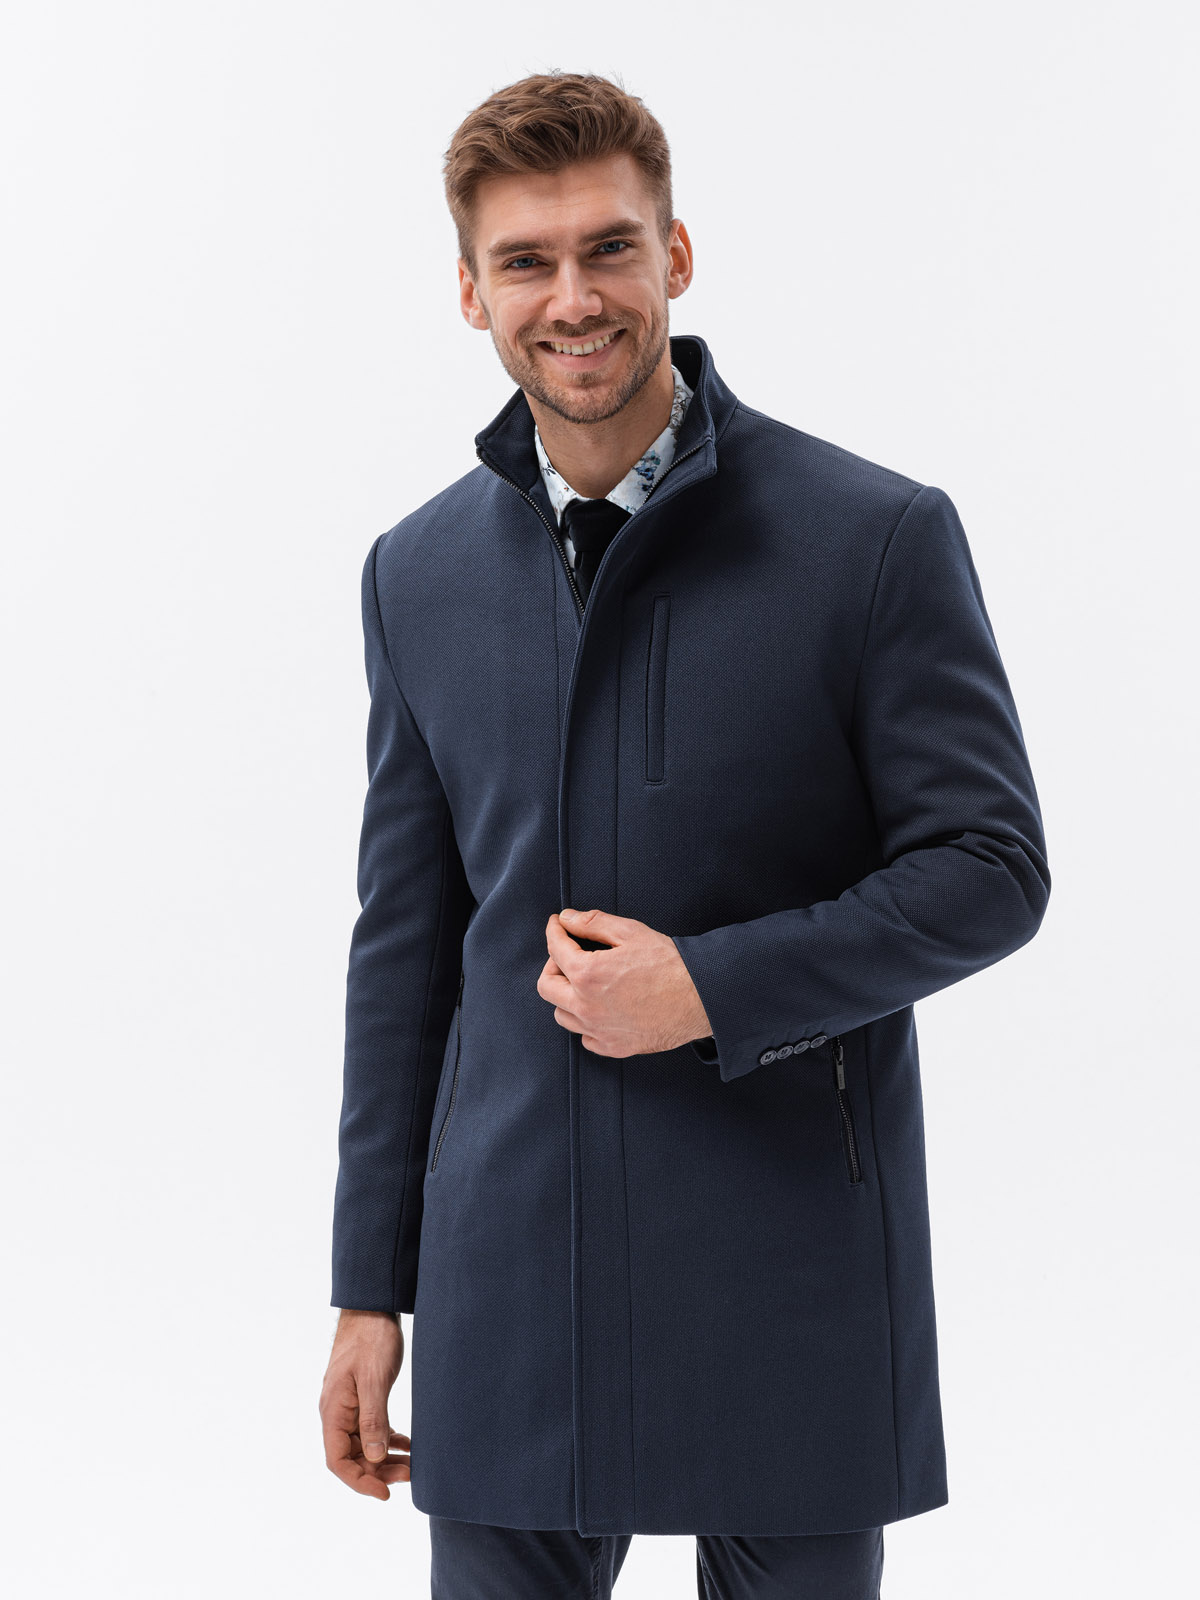 Men's autumn coat C430 - navy | MODONE wholesale - Clothing For Men